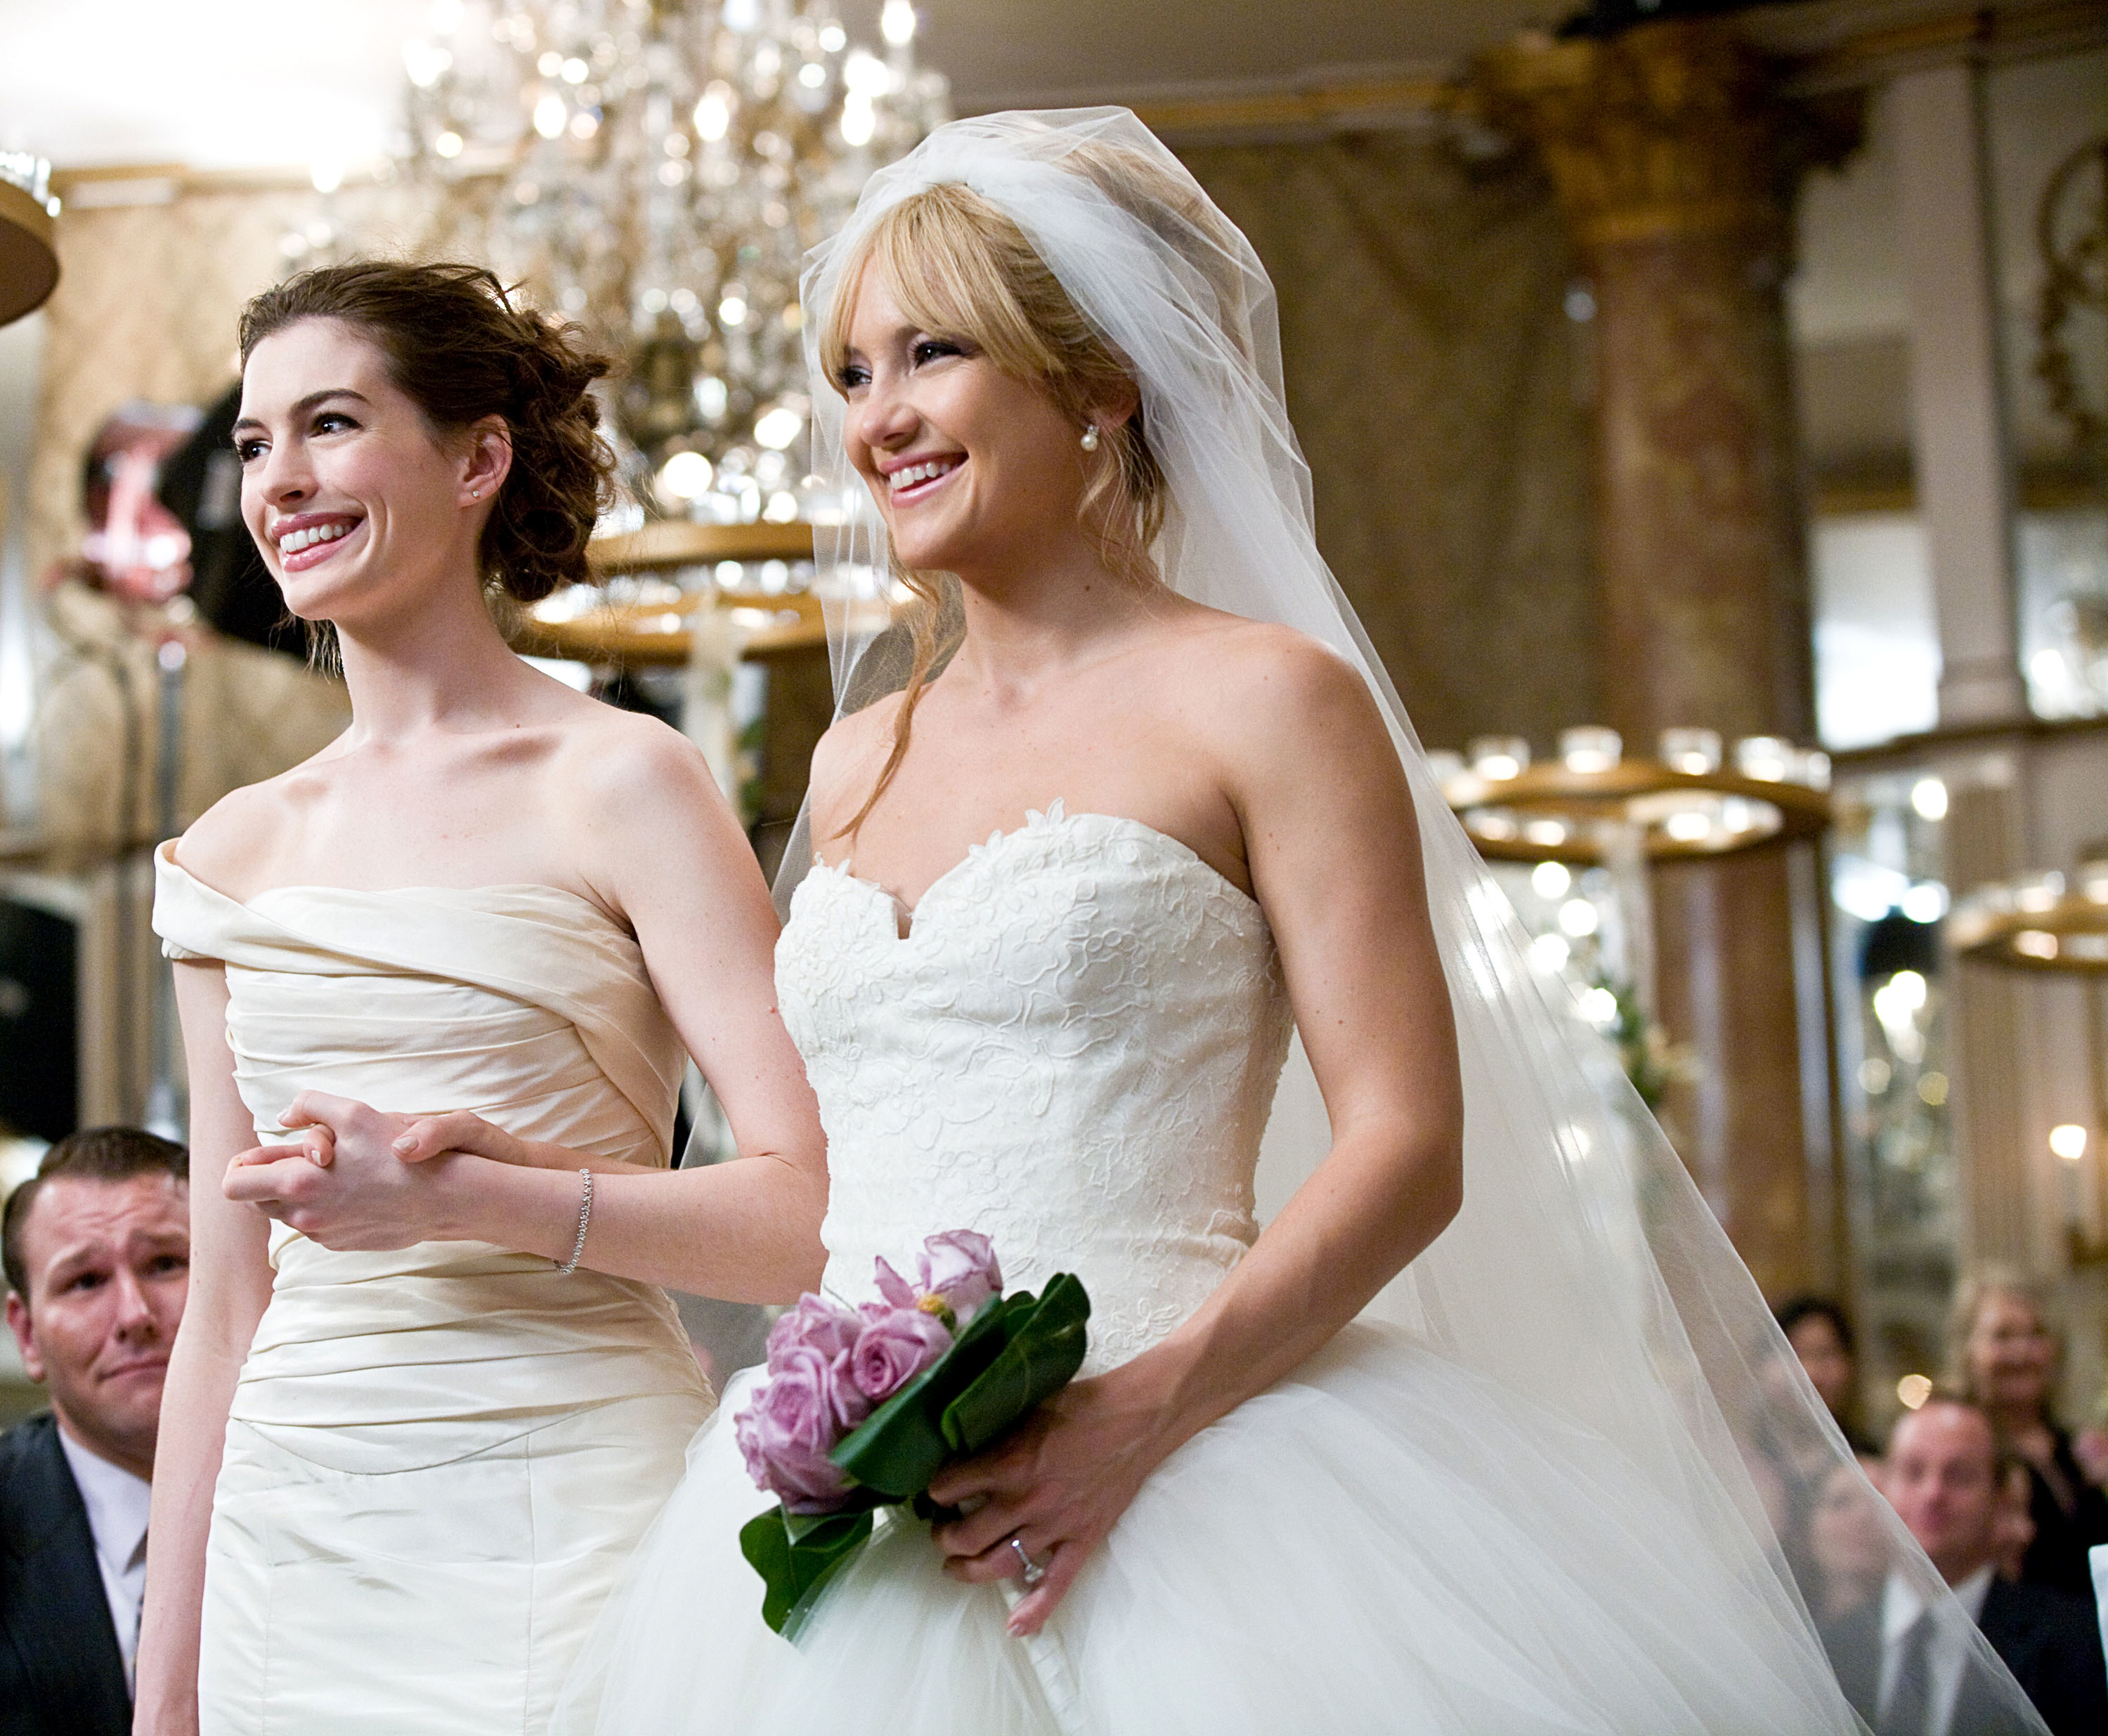 Anne Hathaway and Kate Hudson dressed as brides in Bride Wars